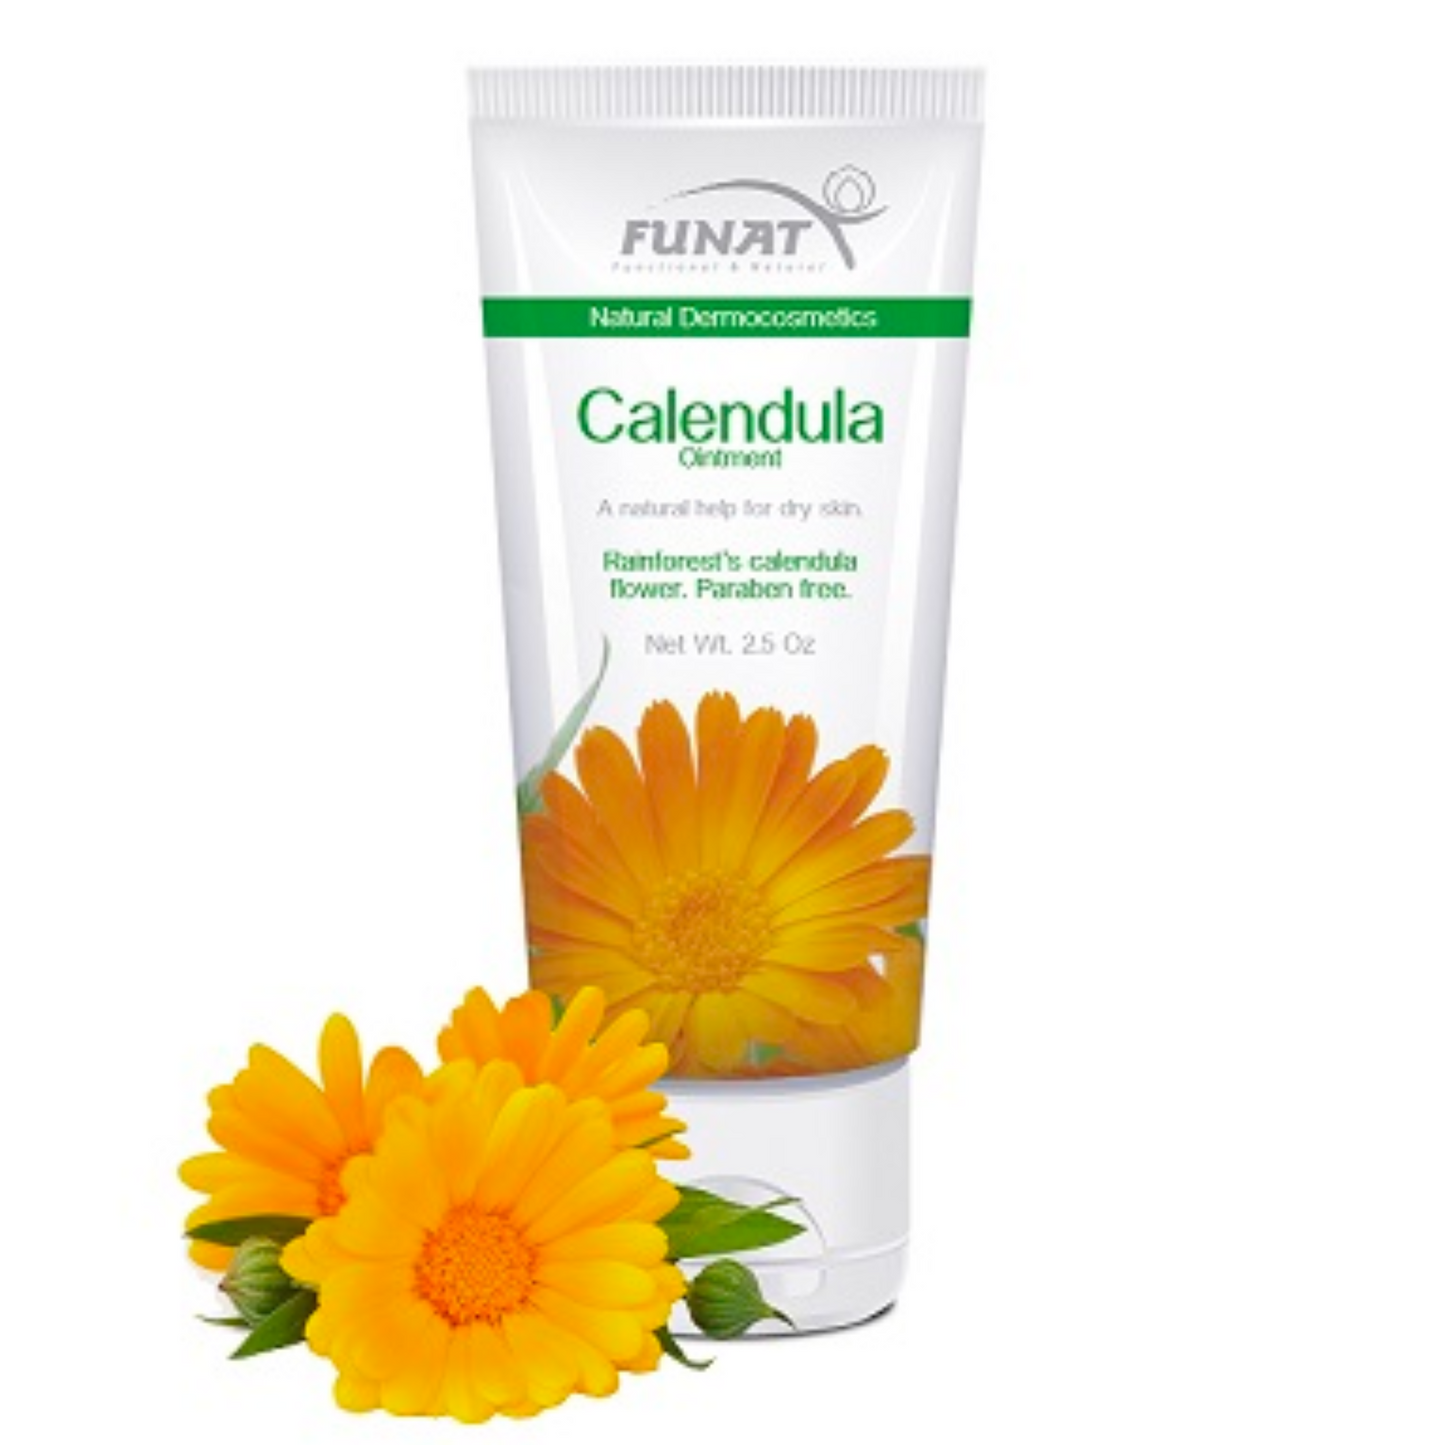 Calendula marigold Ointment Healing Cicatrizing Natural Help For Dry Skin